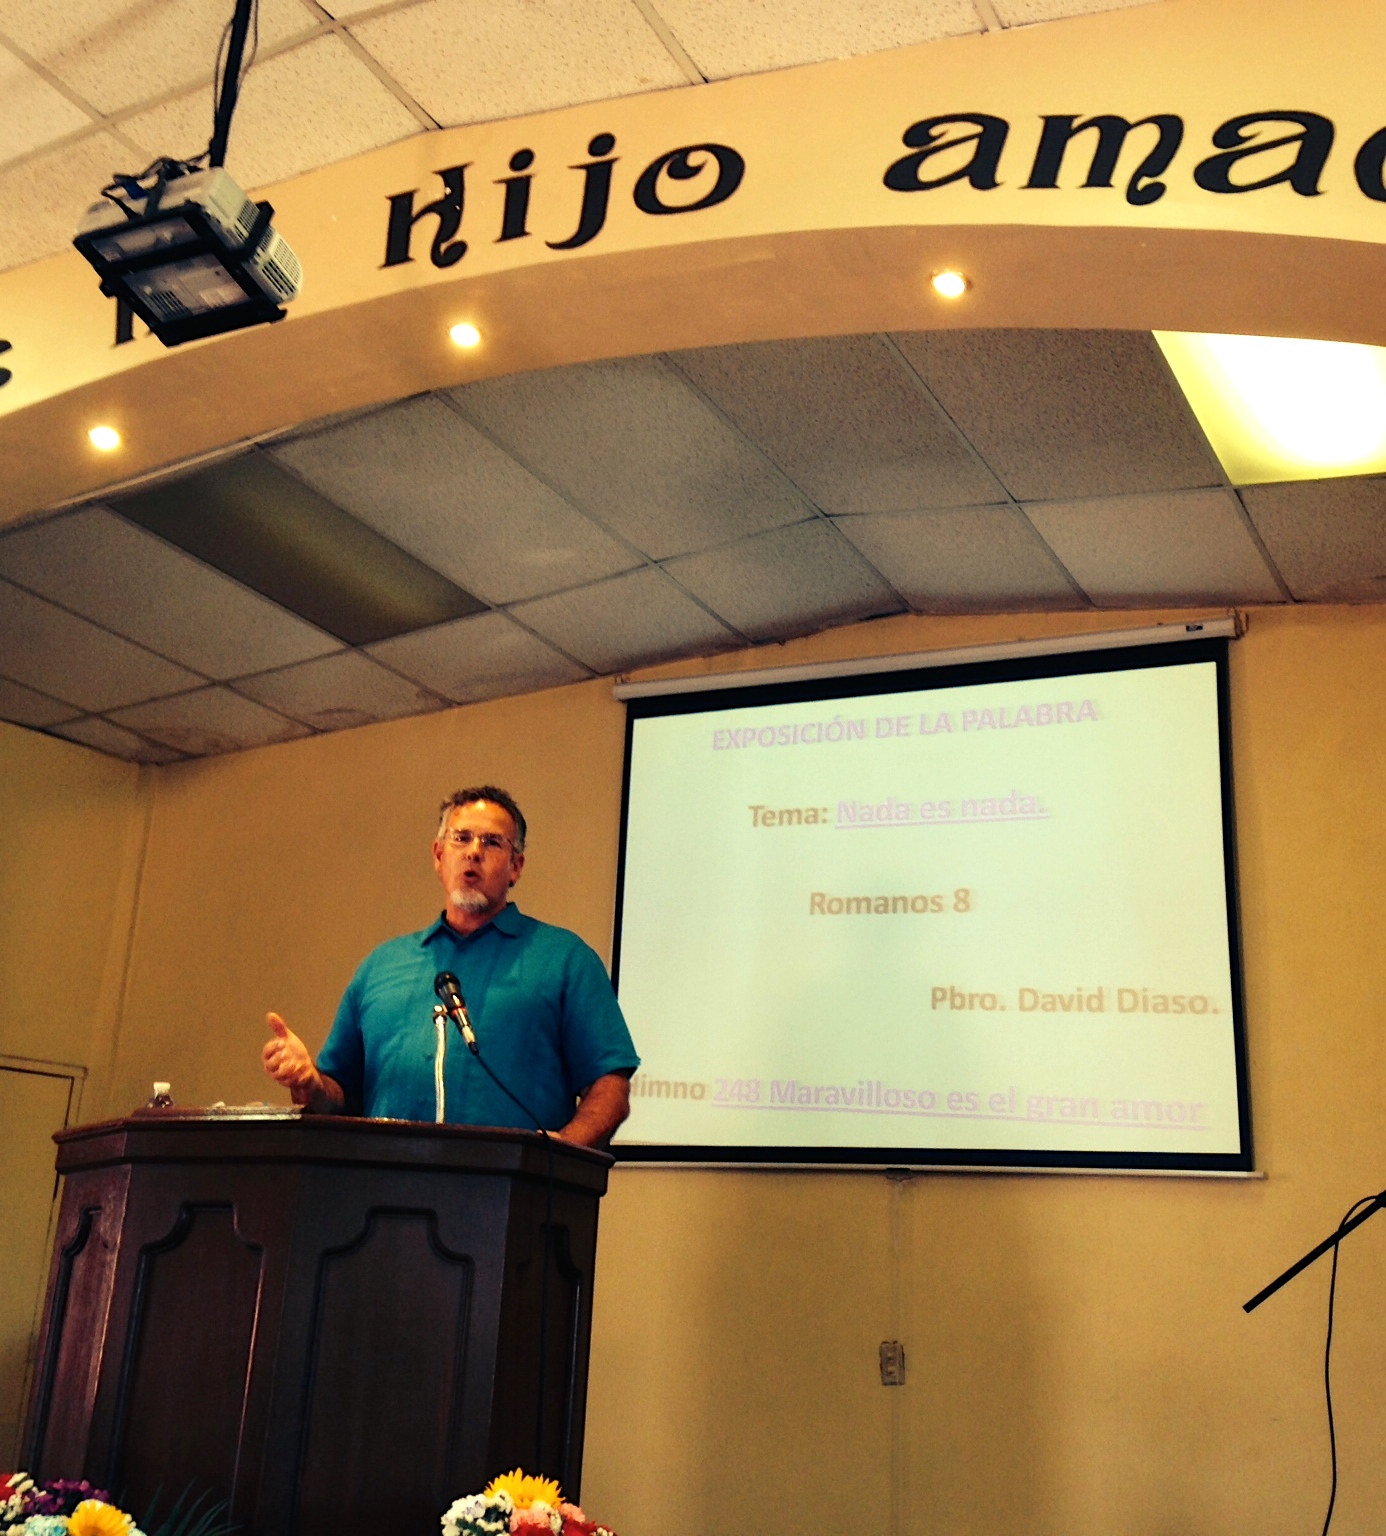 Dave preaching at Iglesia Nueva Jerusalén (New Jerusalem Church) in Ensenada